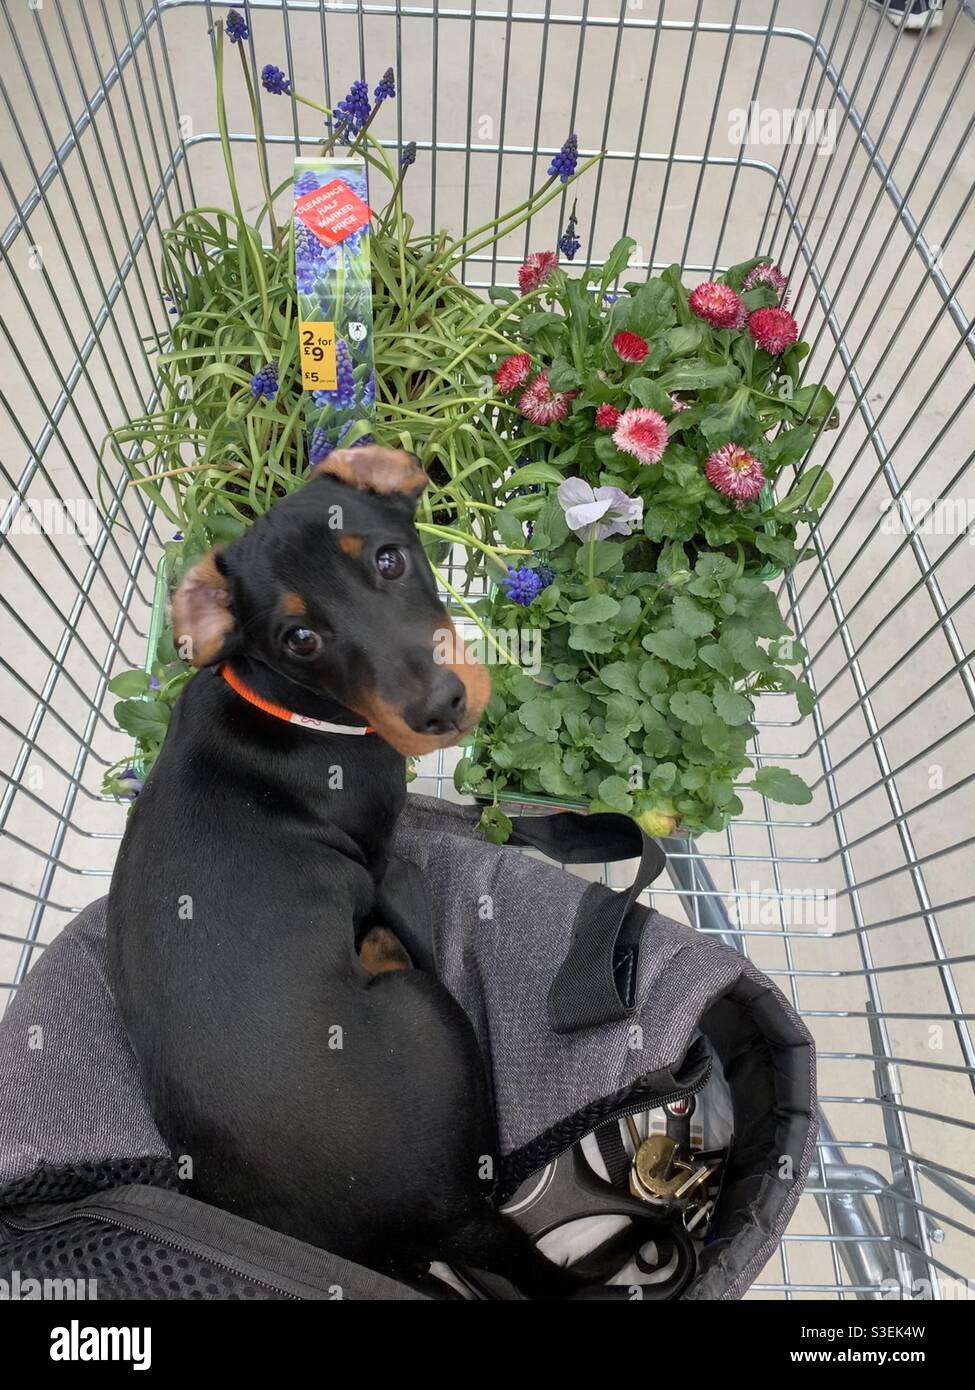 Garden centre shopping with my dachshund Stock Photo